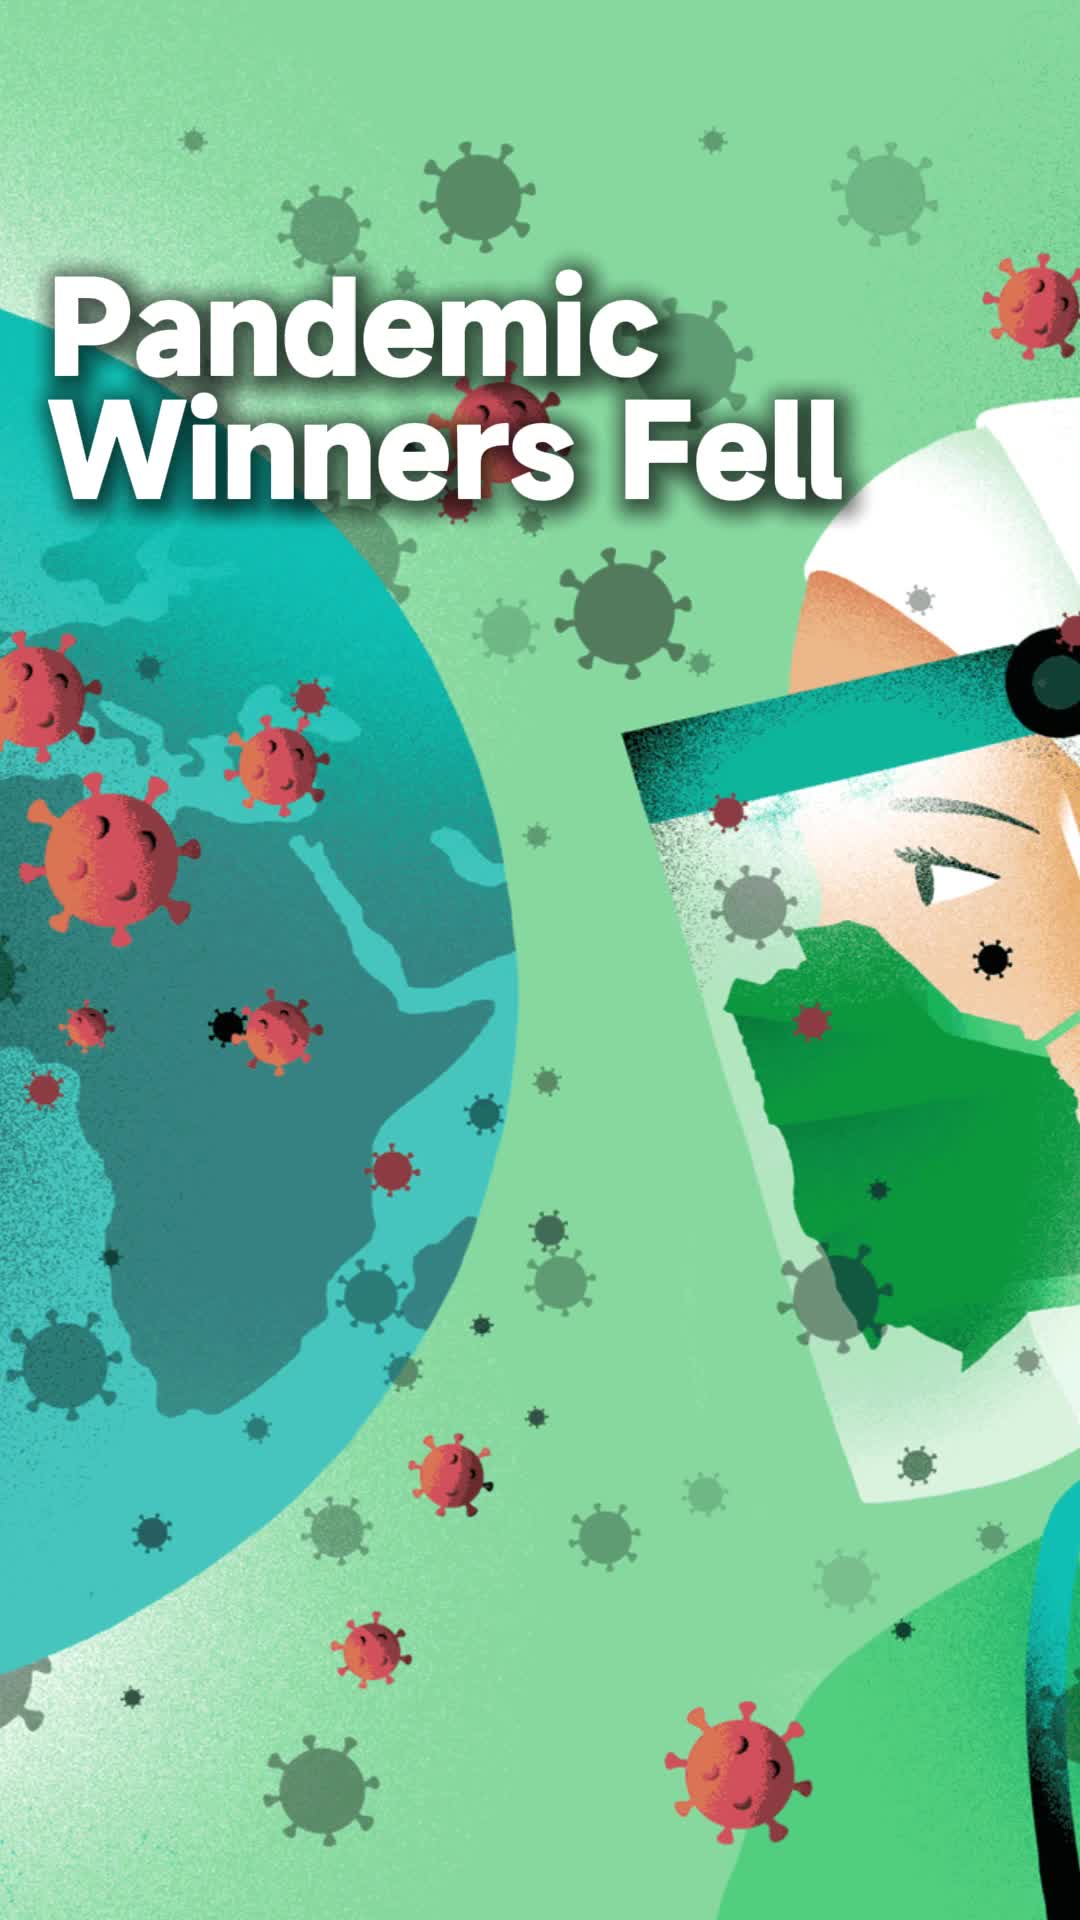 Pandemic Winners Fell